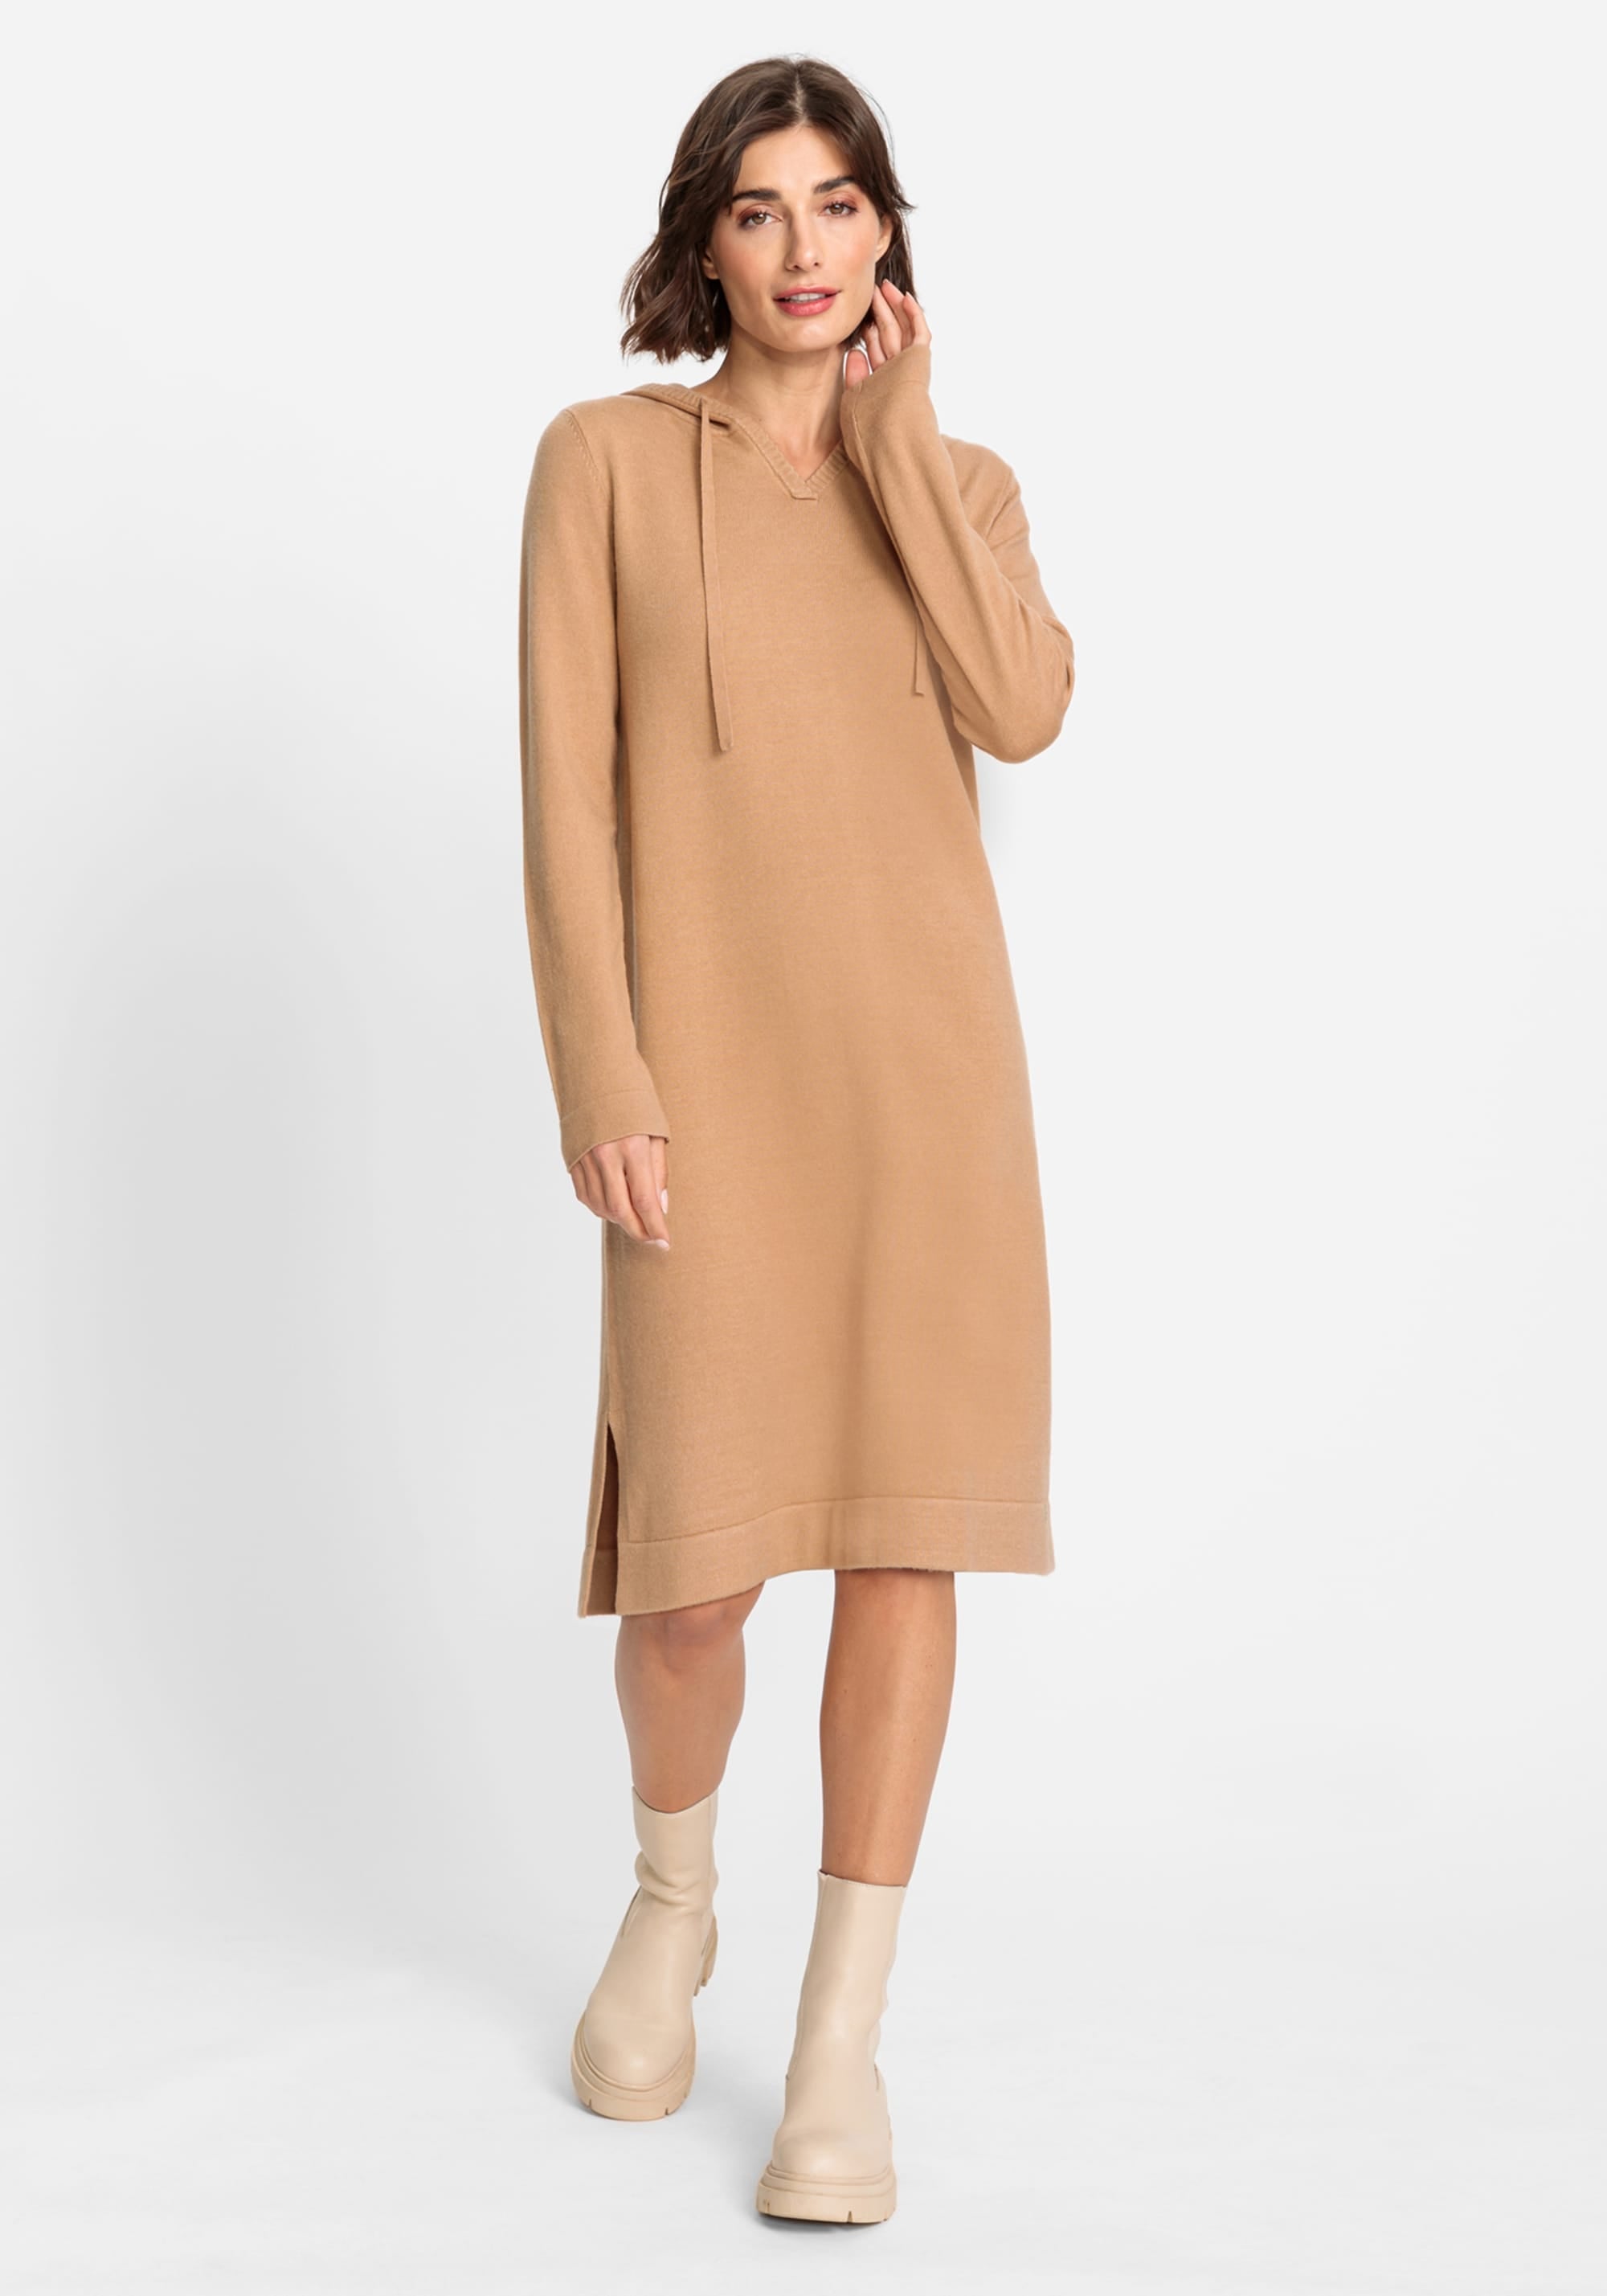 Sweater Dresses For Women, Online Dress, Sweater Dress